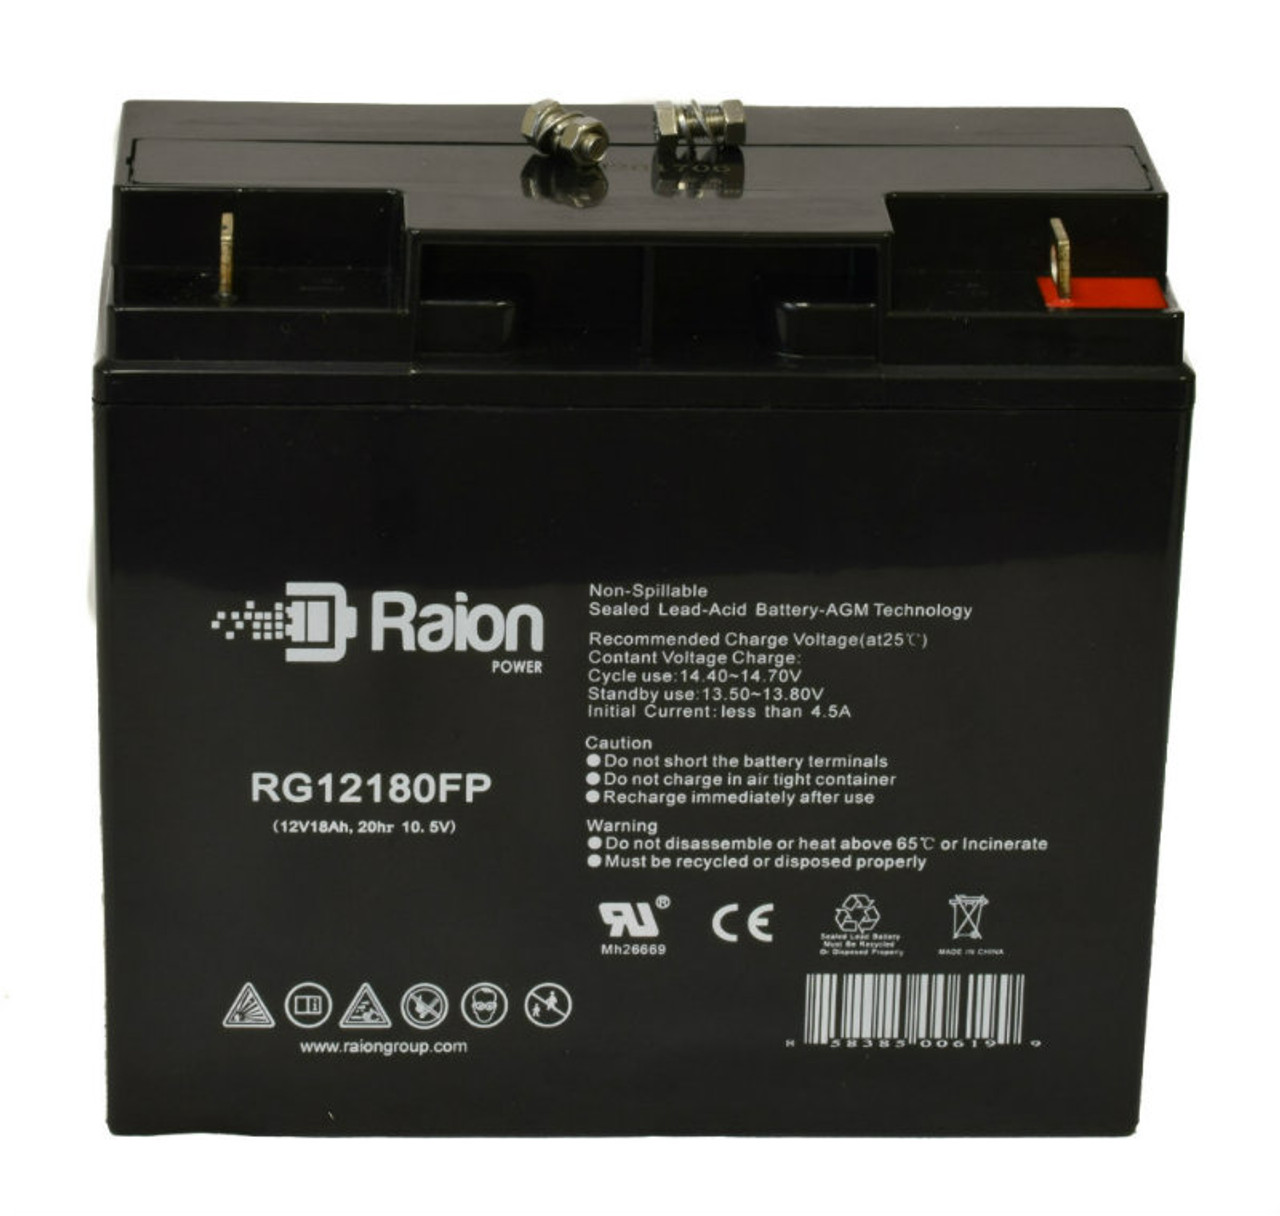 Raion Power RG12180FP 12V 18Ah Lead Acid Battery for Big Beam 2IL24S15